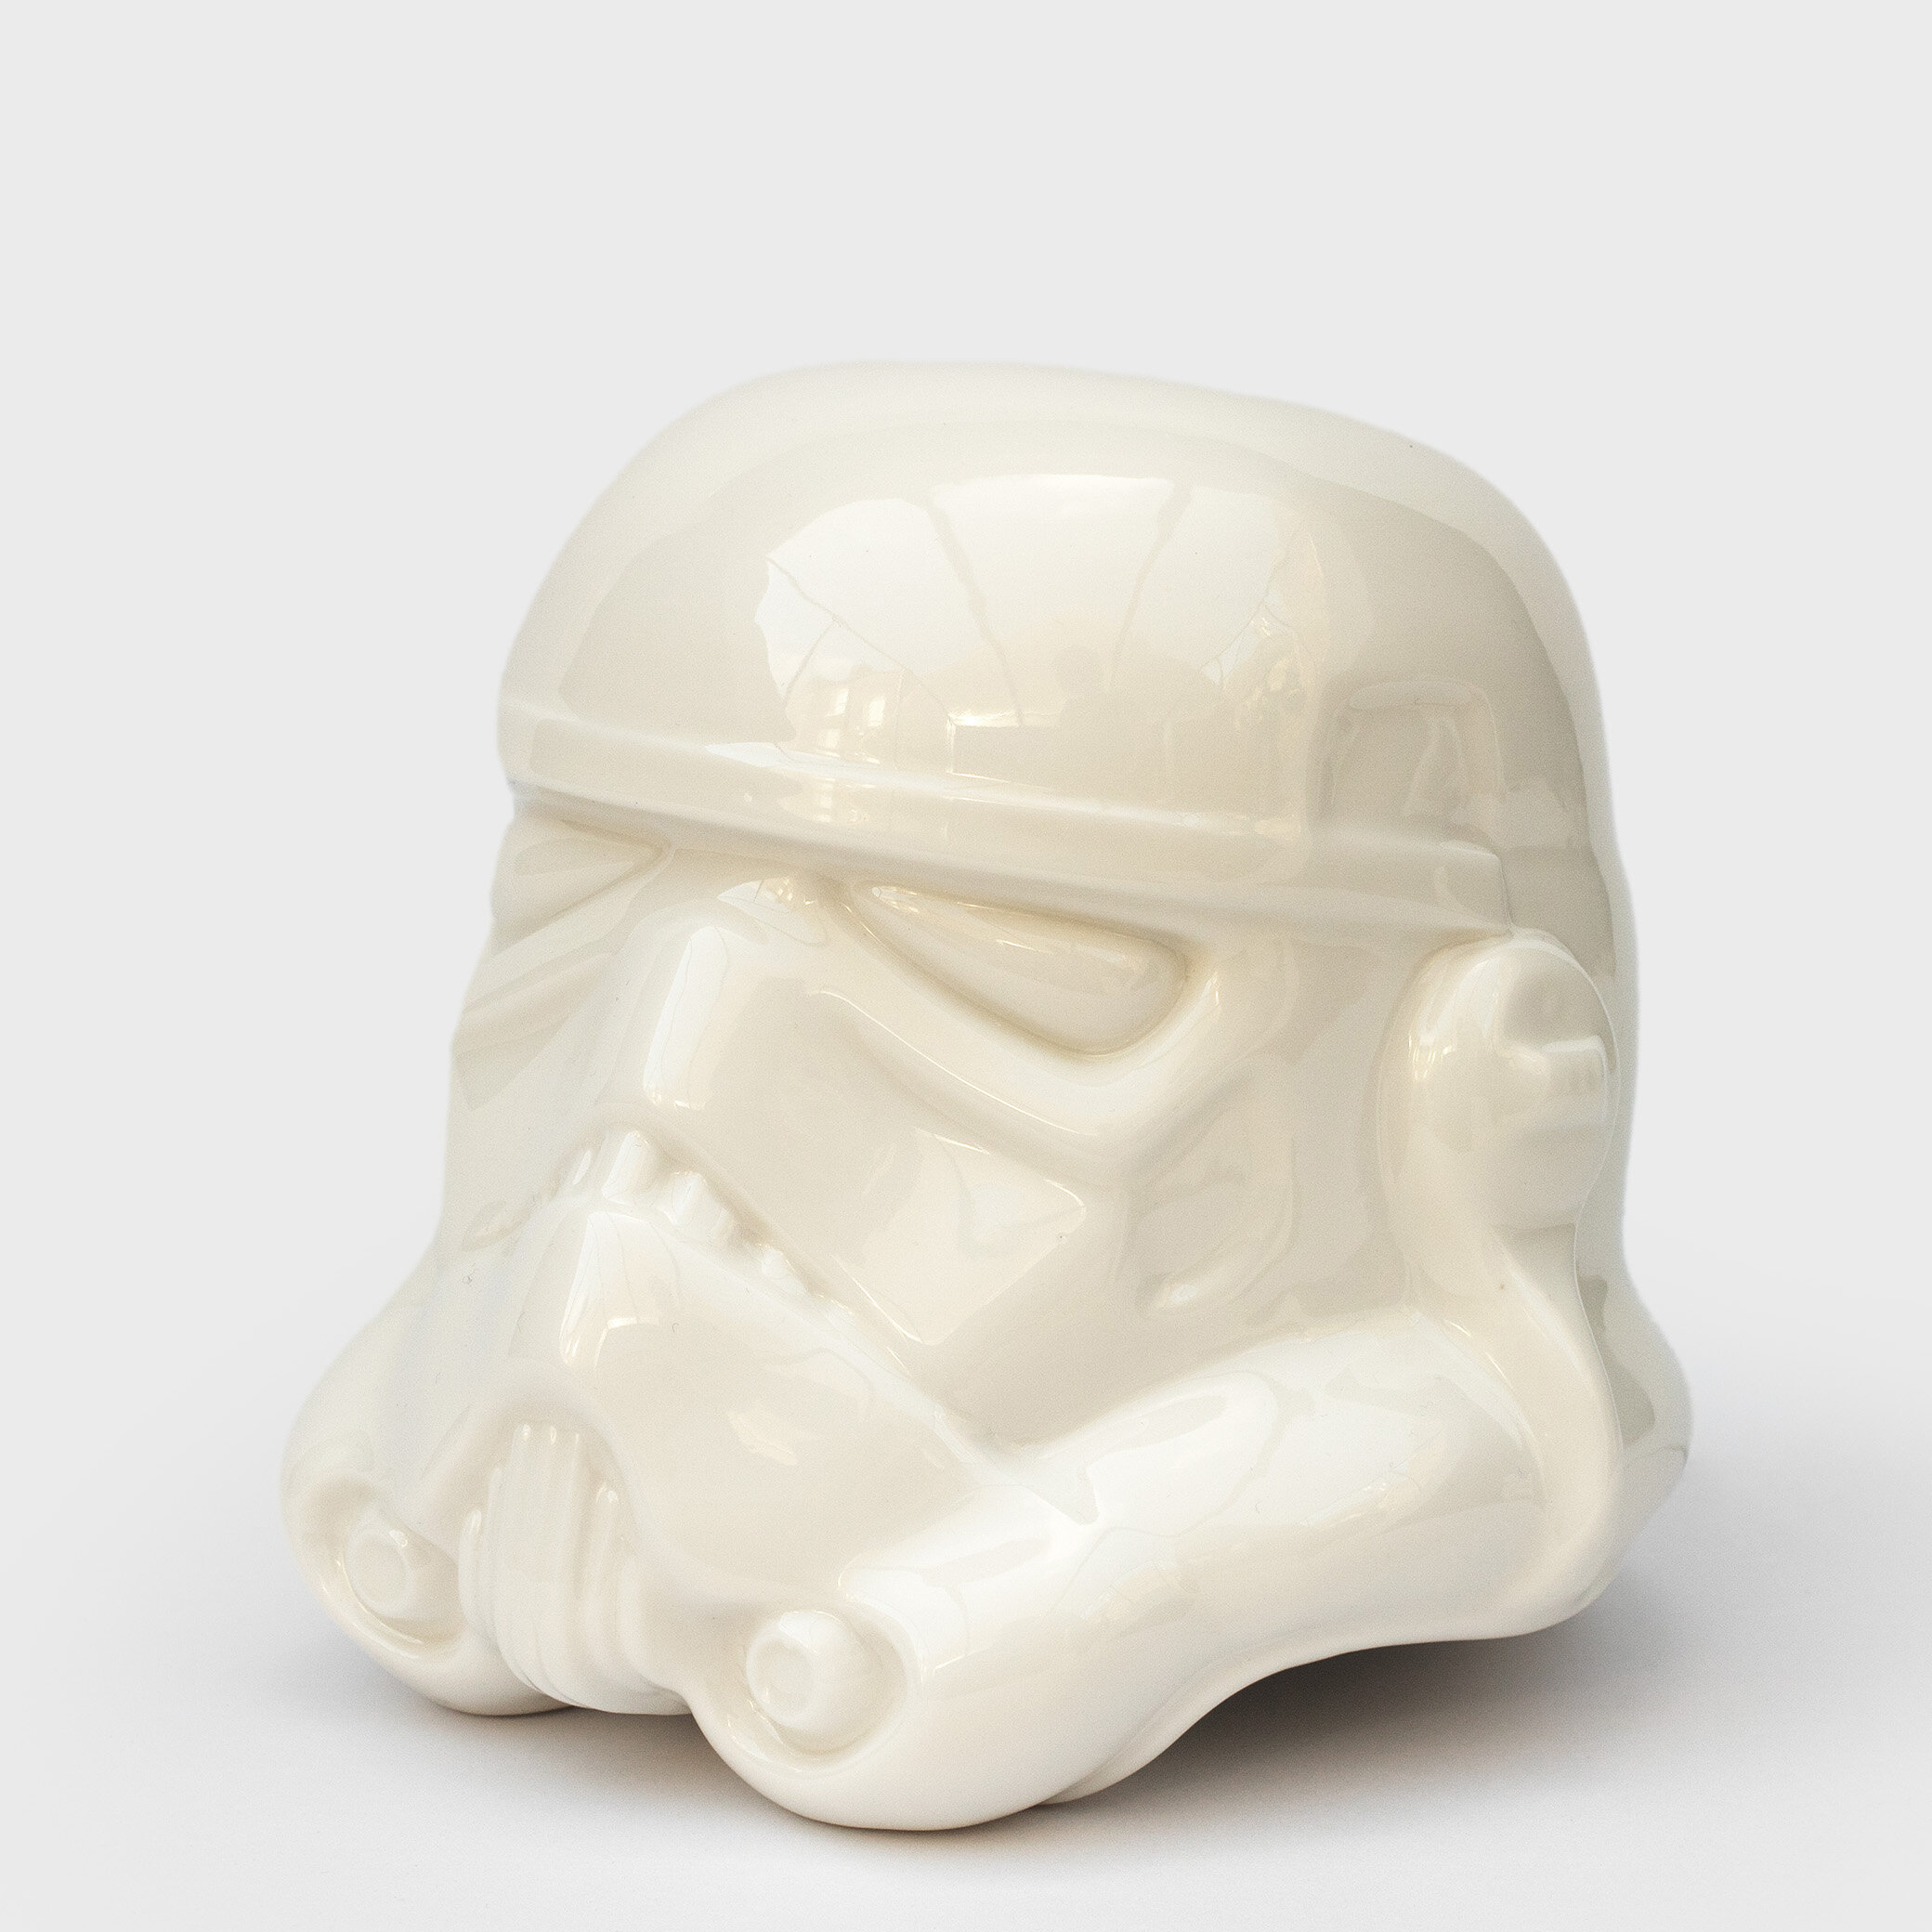 replica-stormtrooper-helmet-lamp-limited-edition